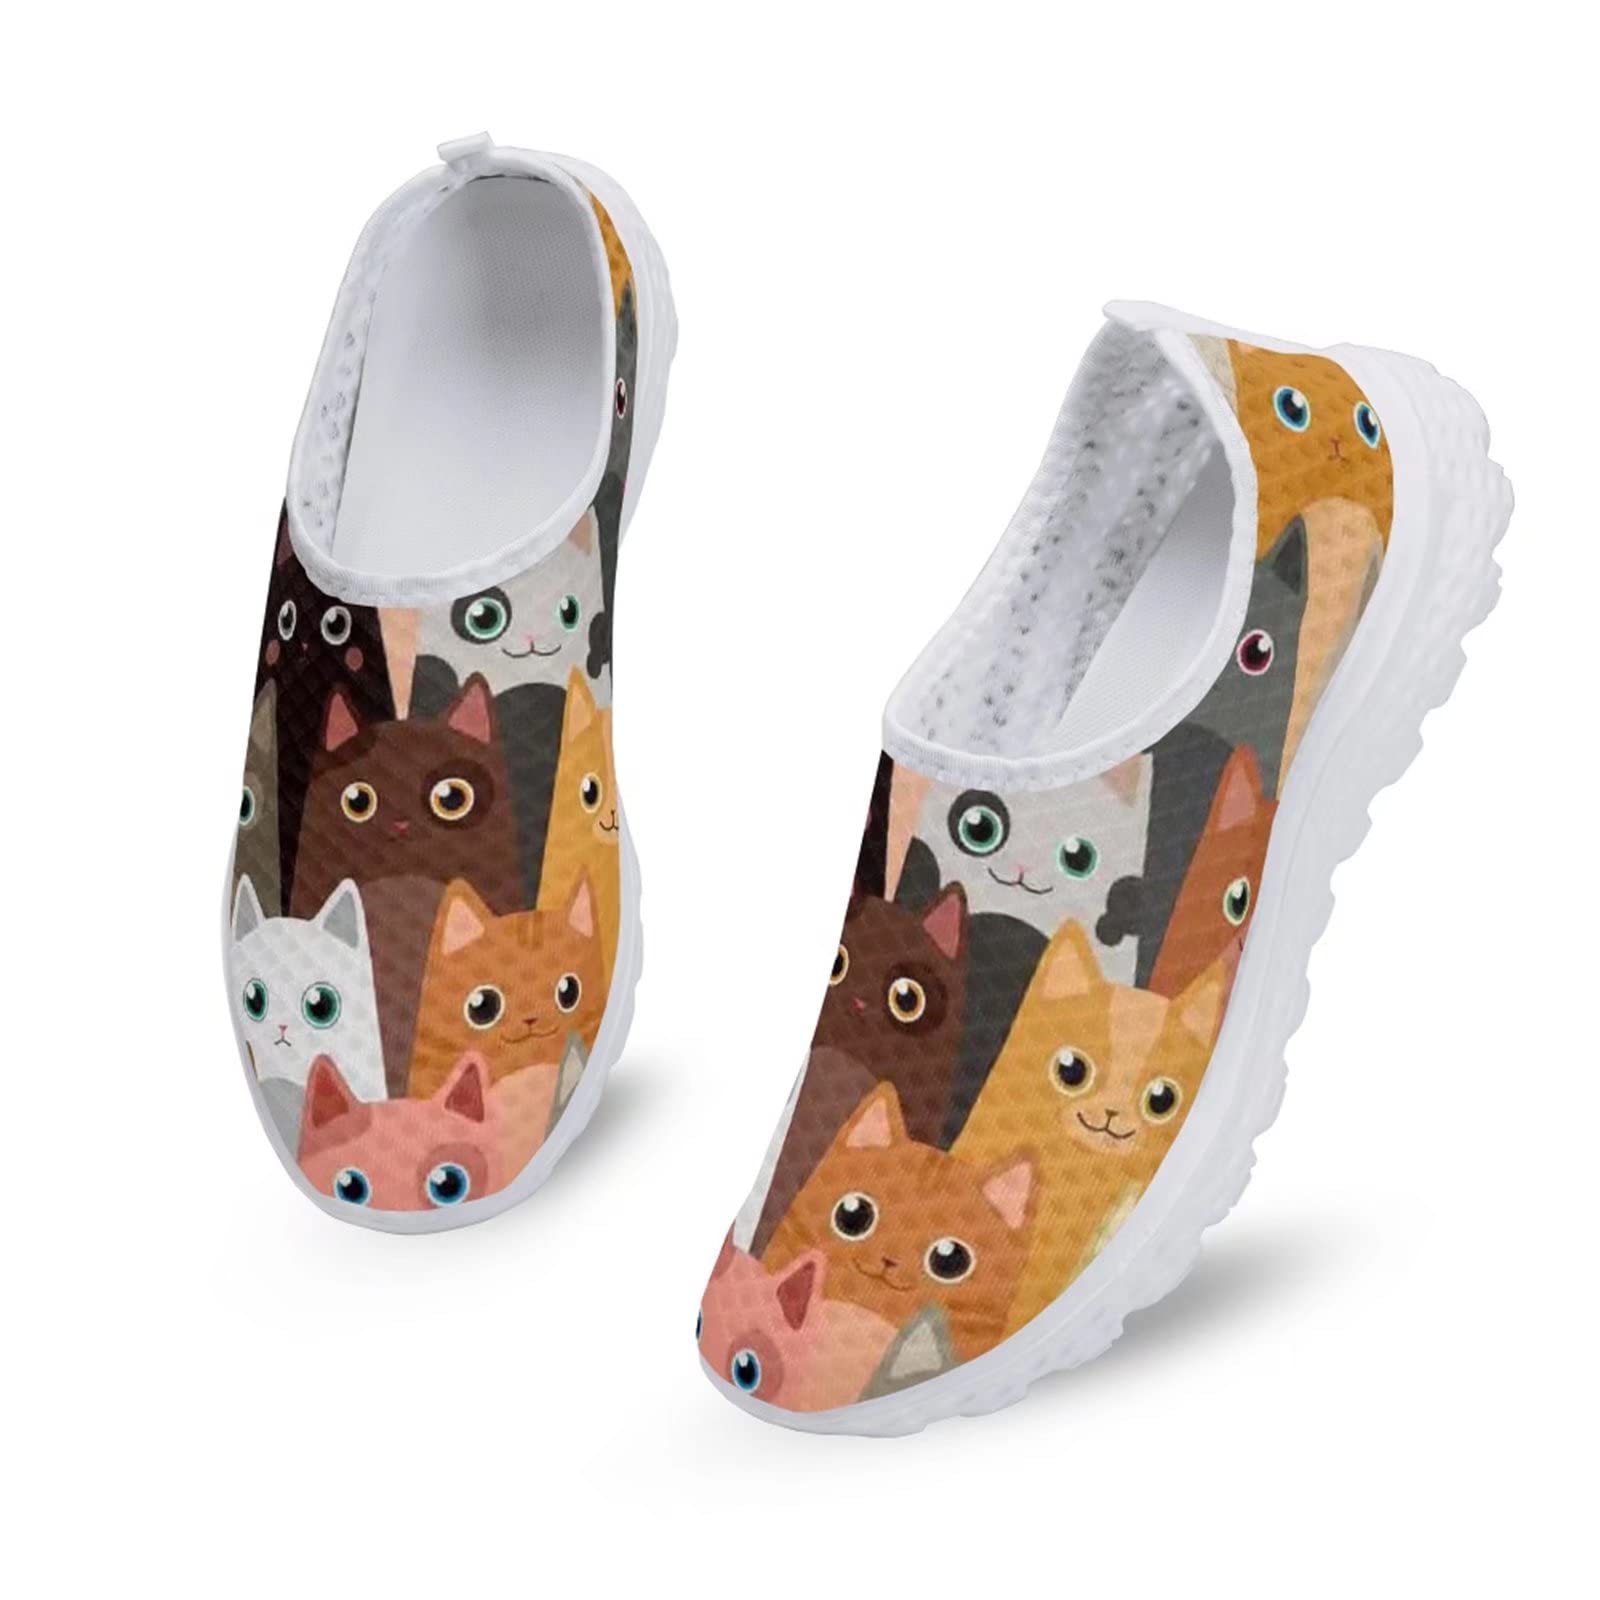 INSTANTARTS Womens Water Shoes Funny Cartoon Cat Print Lightweight Mesh Summer Sneakers Barefoot Aqua Swim Walking Shoes